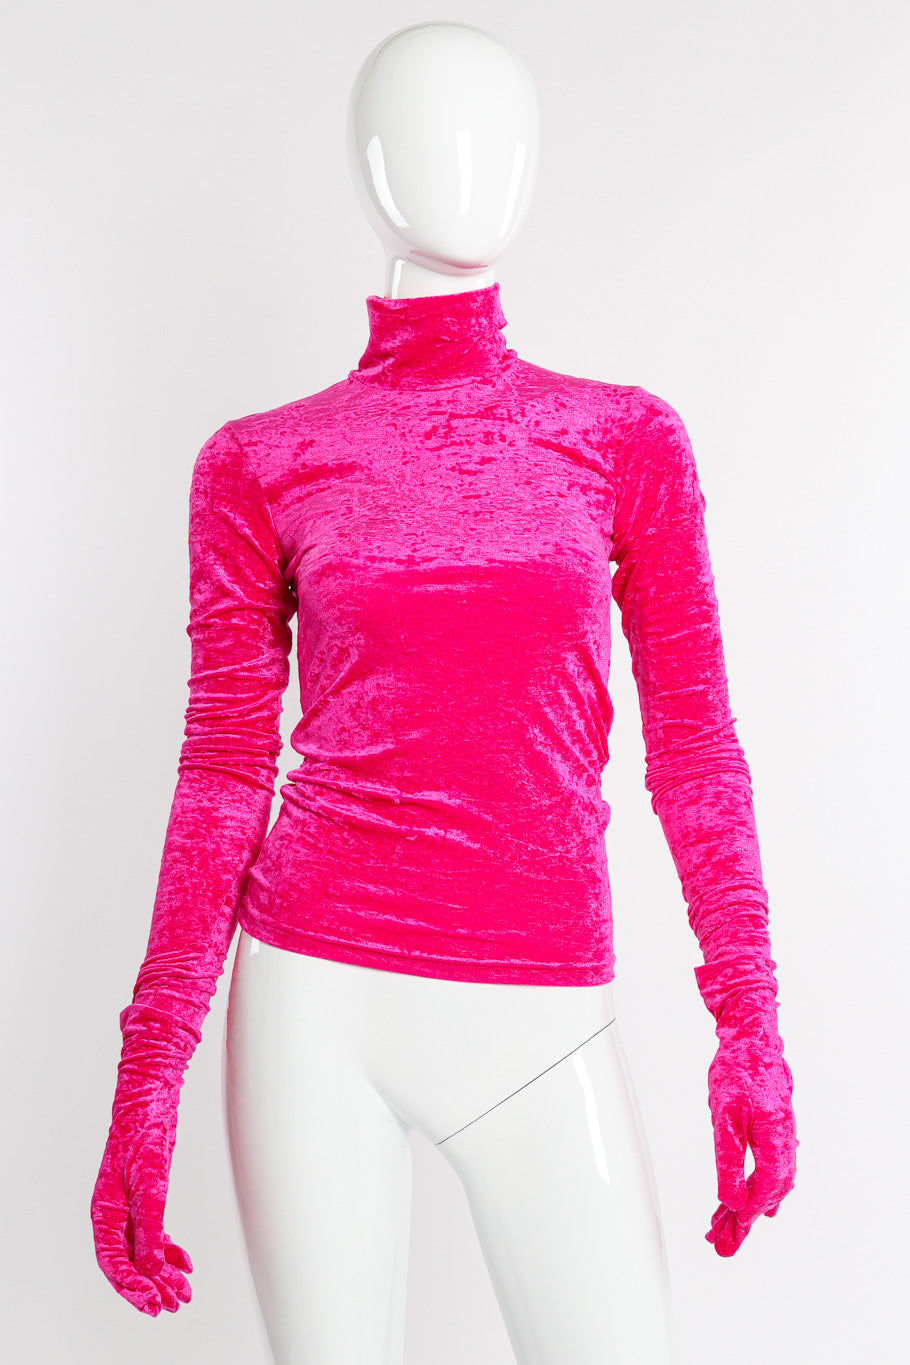 Balenciaga Velvet Turtleneck with Gloves front view on mannequin @Recessla